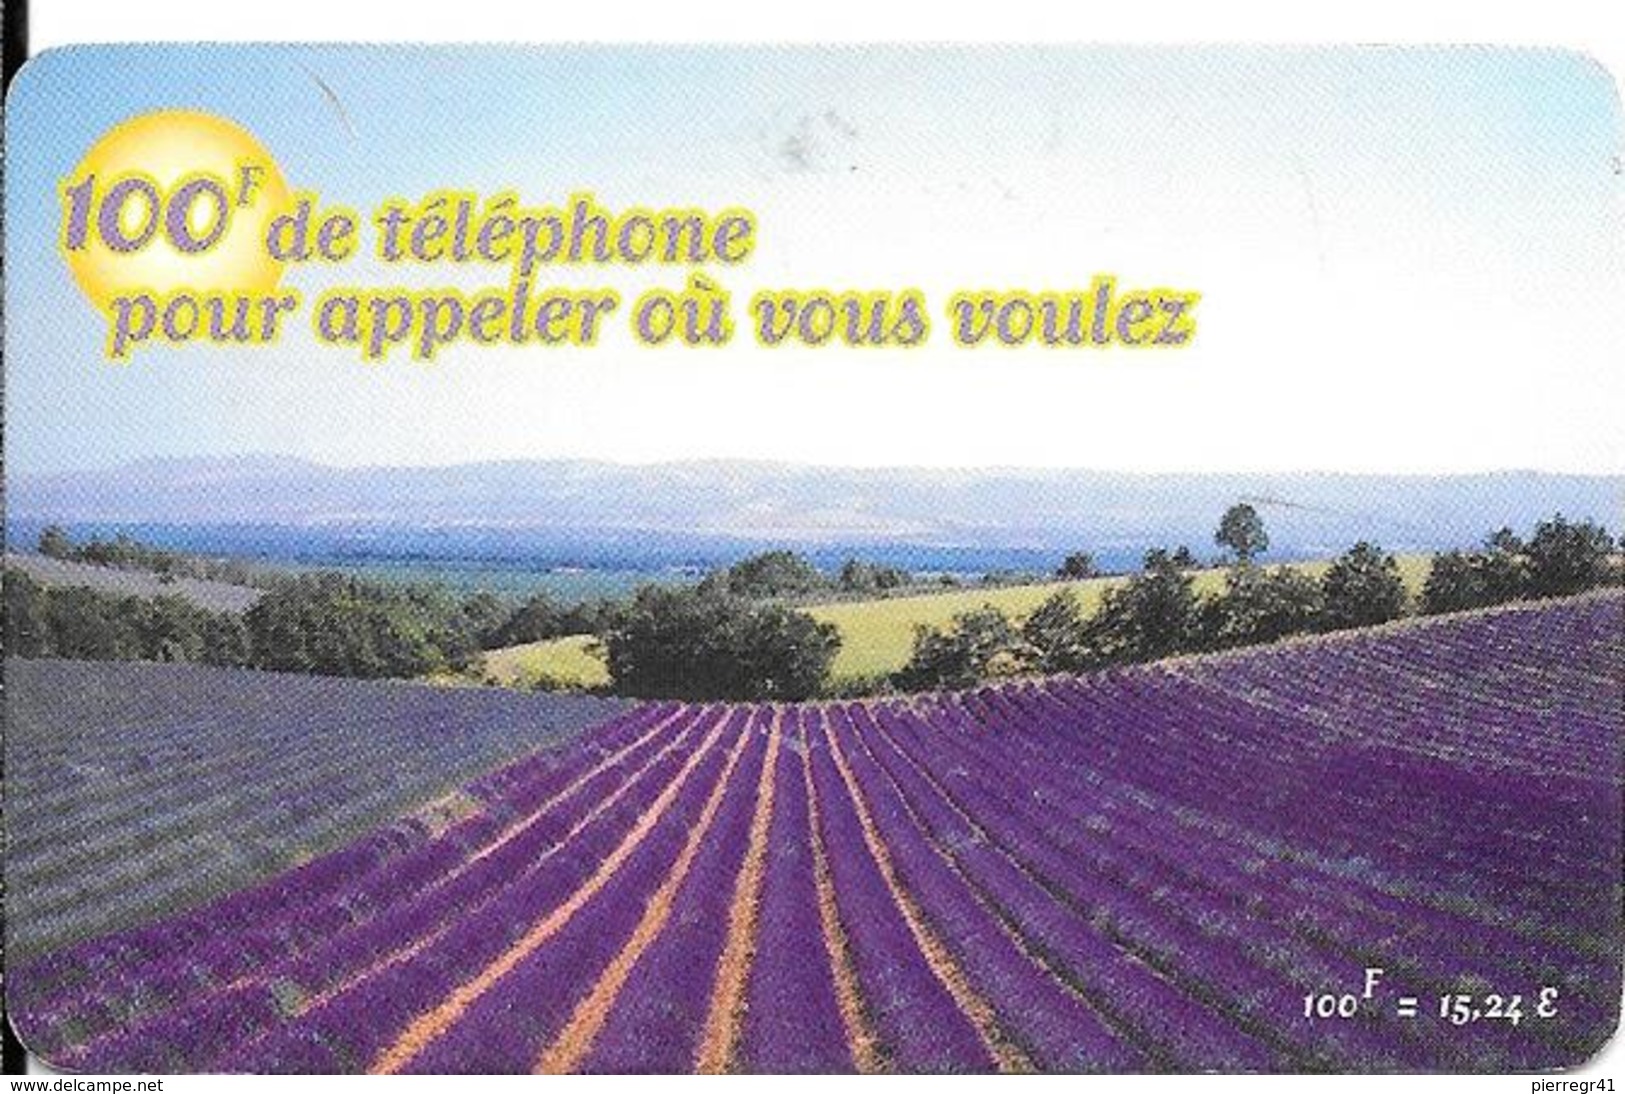 TICKET TELEPHONE-TICKET PR 49-LAVANDE 1-Recto-100F=15.24€-  N°--N° LOT-1Lettre 7 Chiffres 2LettresGRATTE-TBE- - FT Tickets